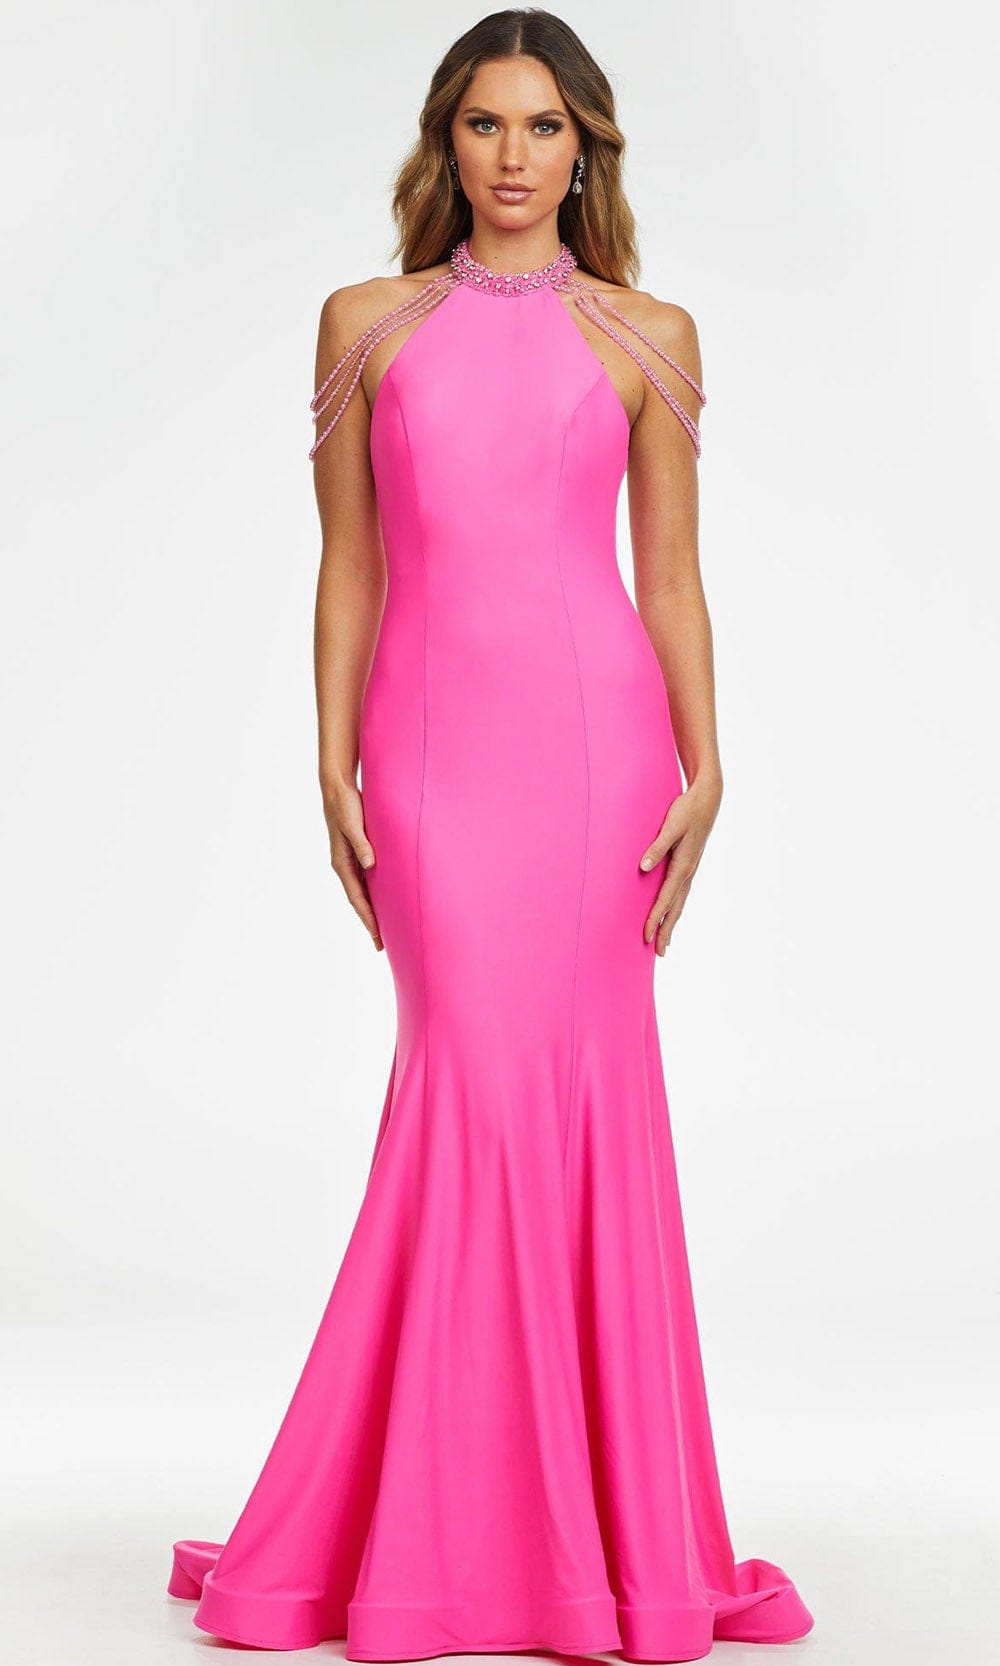 Ashley Lauren - 11170 Beaded High Halter Mermaid Gown Prom Dresses 0 / Fuchsia